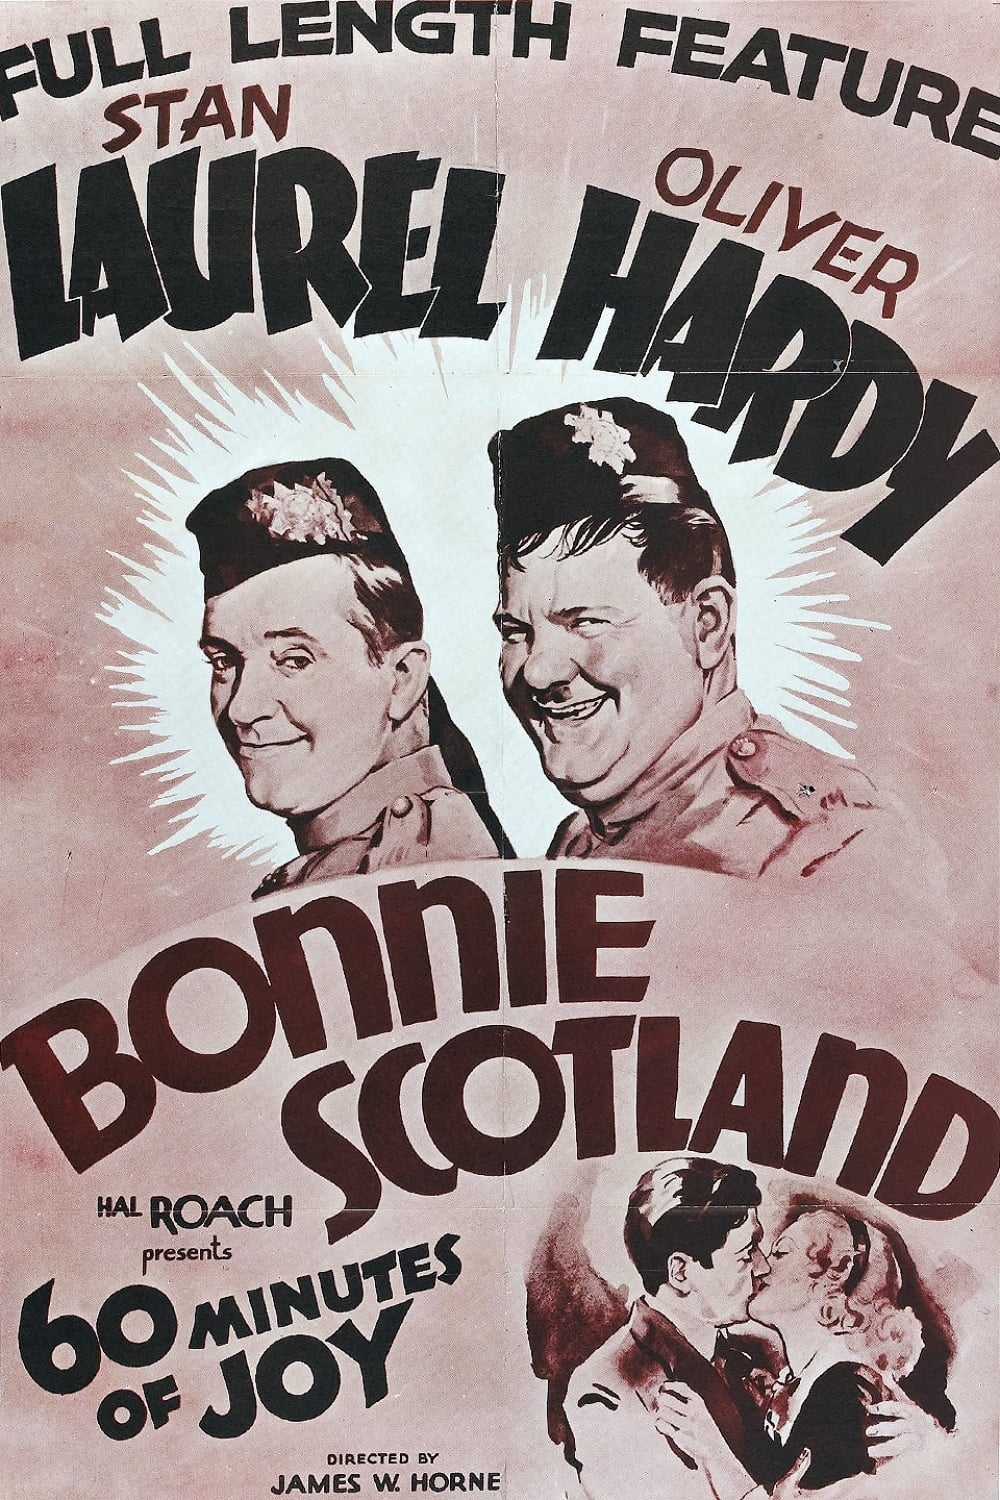 EN - Bonnie Scotland (1935) LAUREL AND HARDY